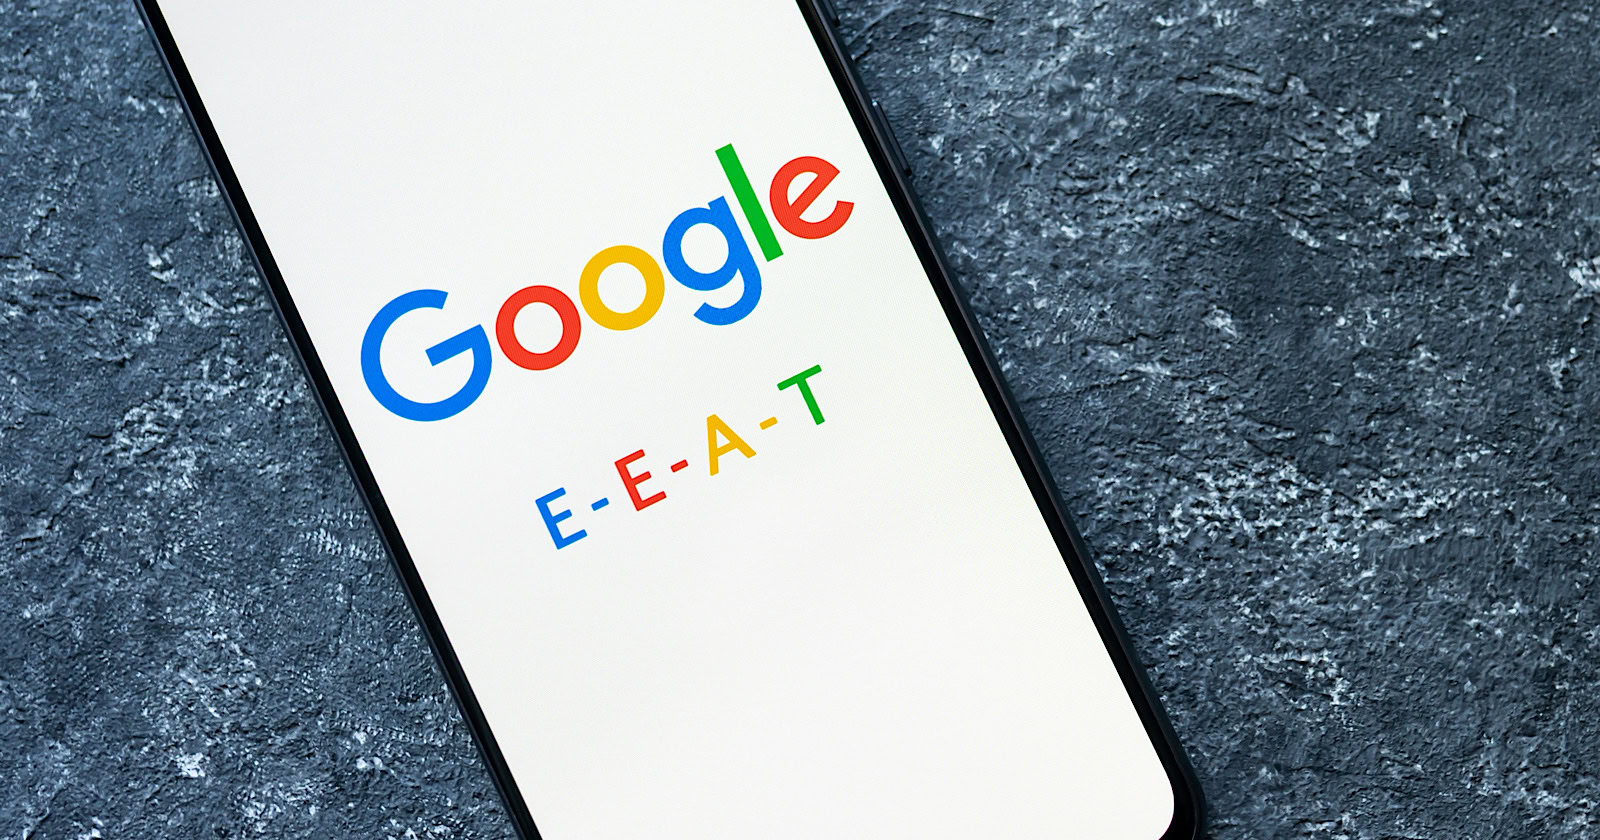 Google E-E-A-T on phone screen